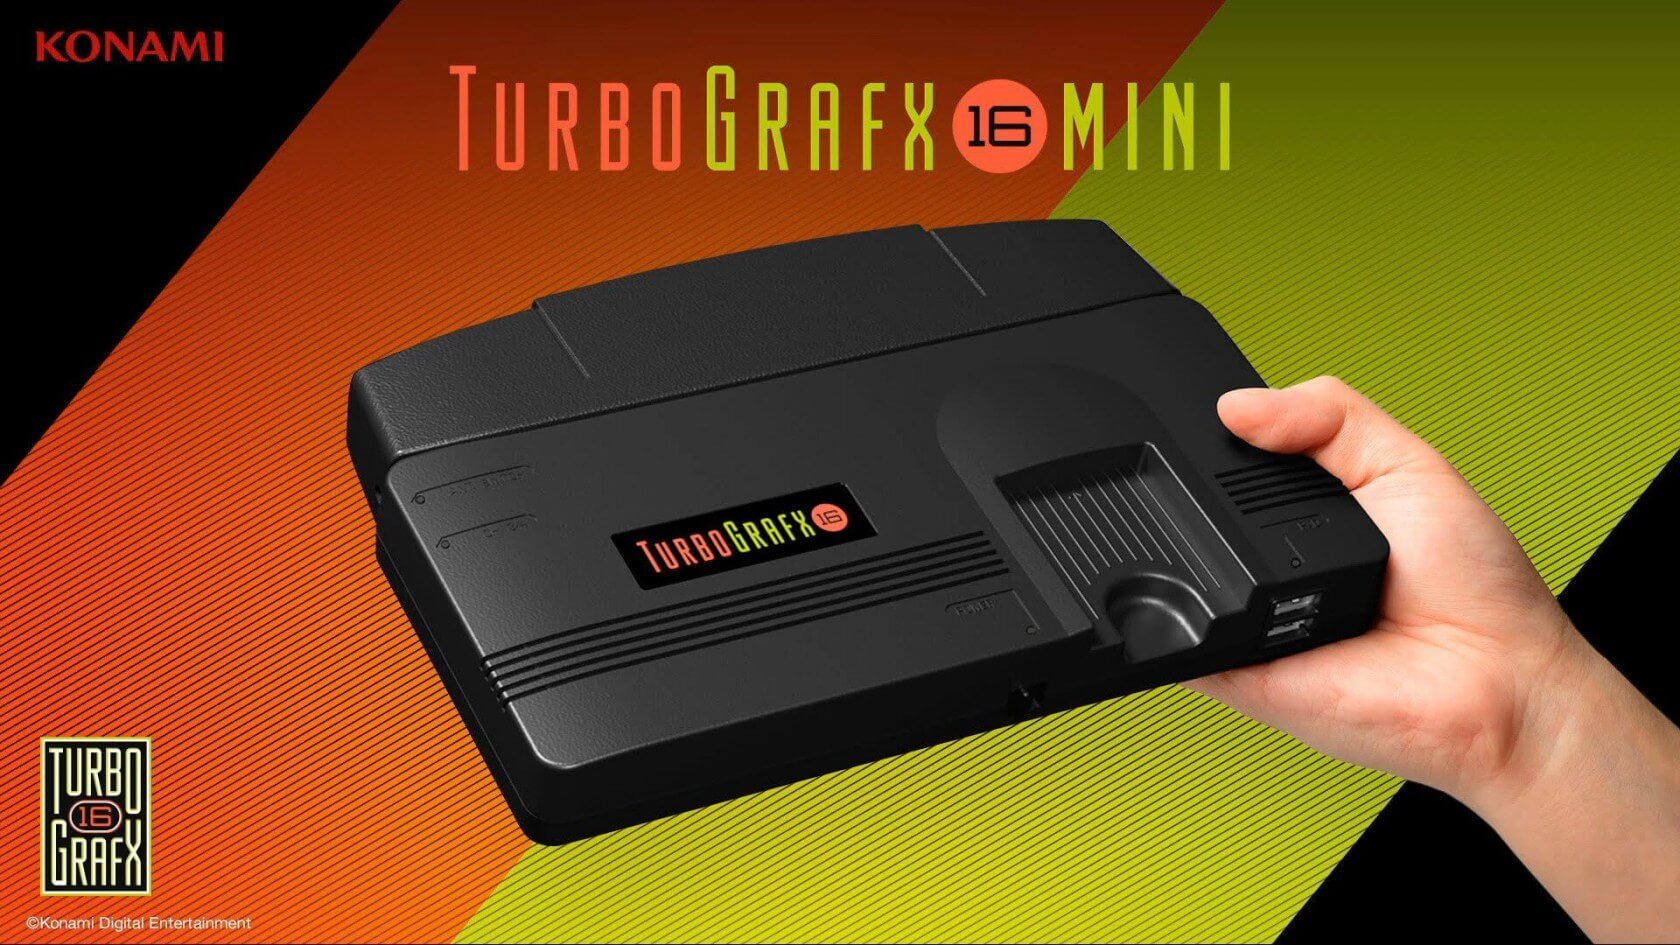 Konami's TurboGrafx-16 Mini retro console gets a new May 22 release date